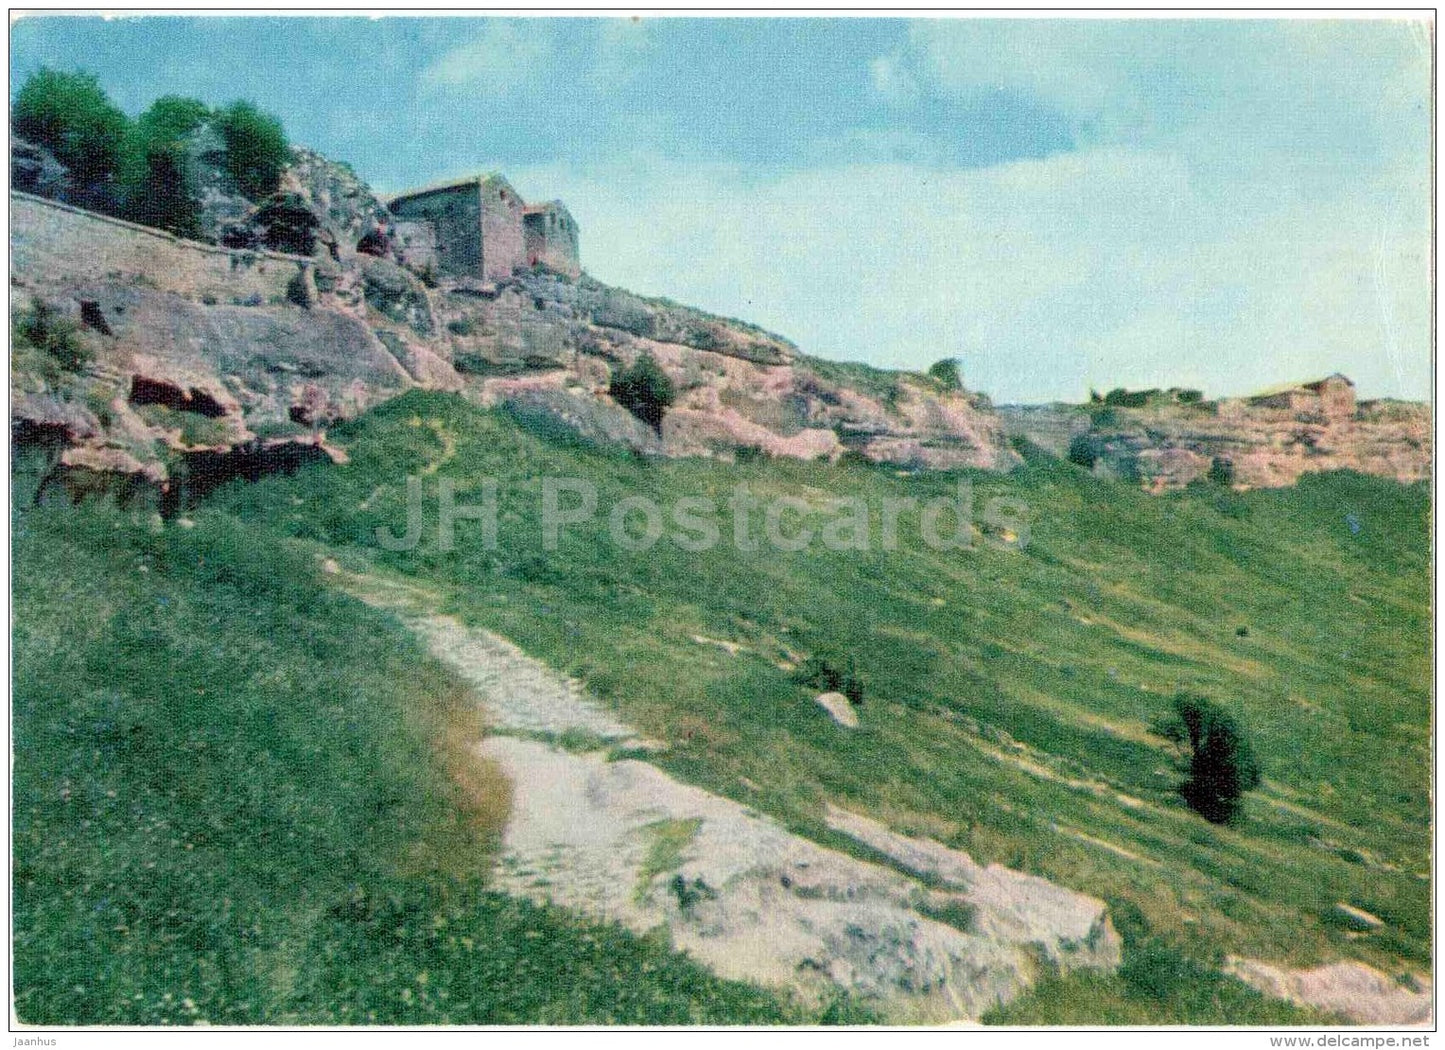 Chufut-Kale cave town - Crimea - 1970 - Ukraine USSR - unused - JH Postcards